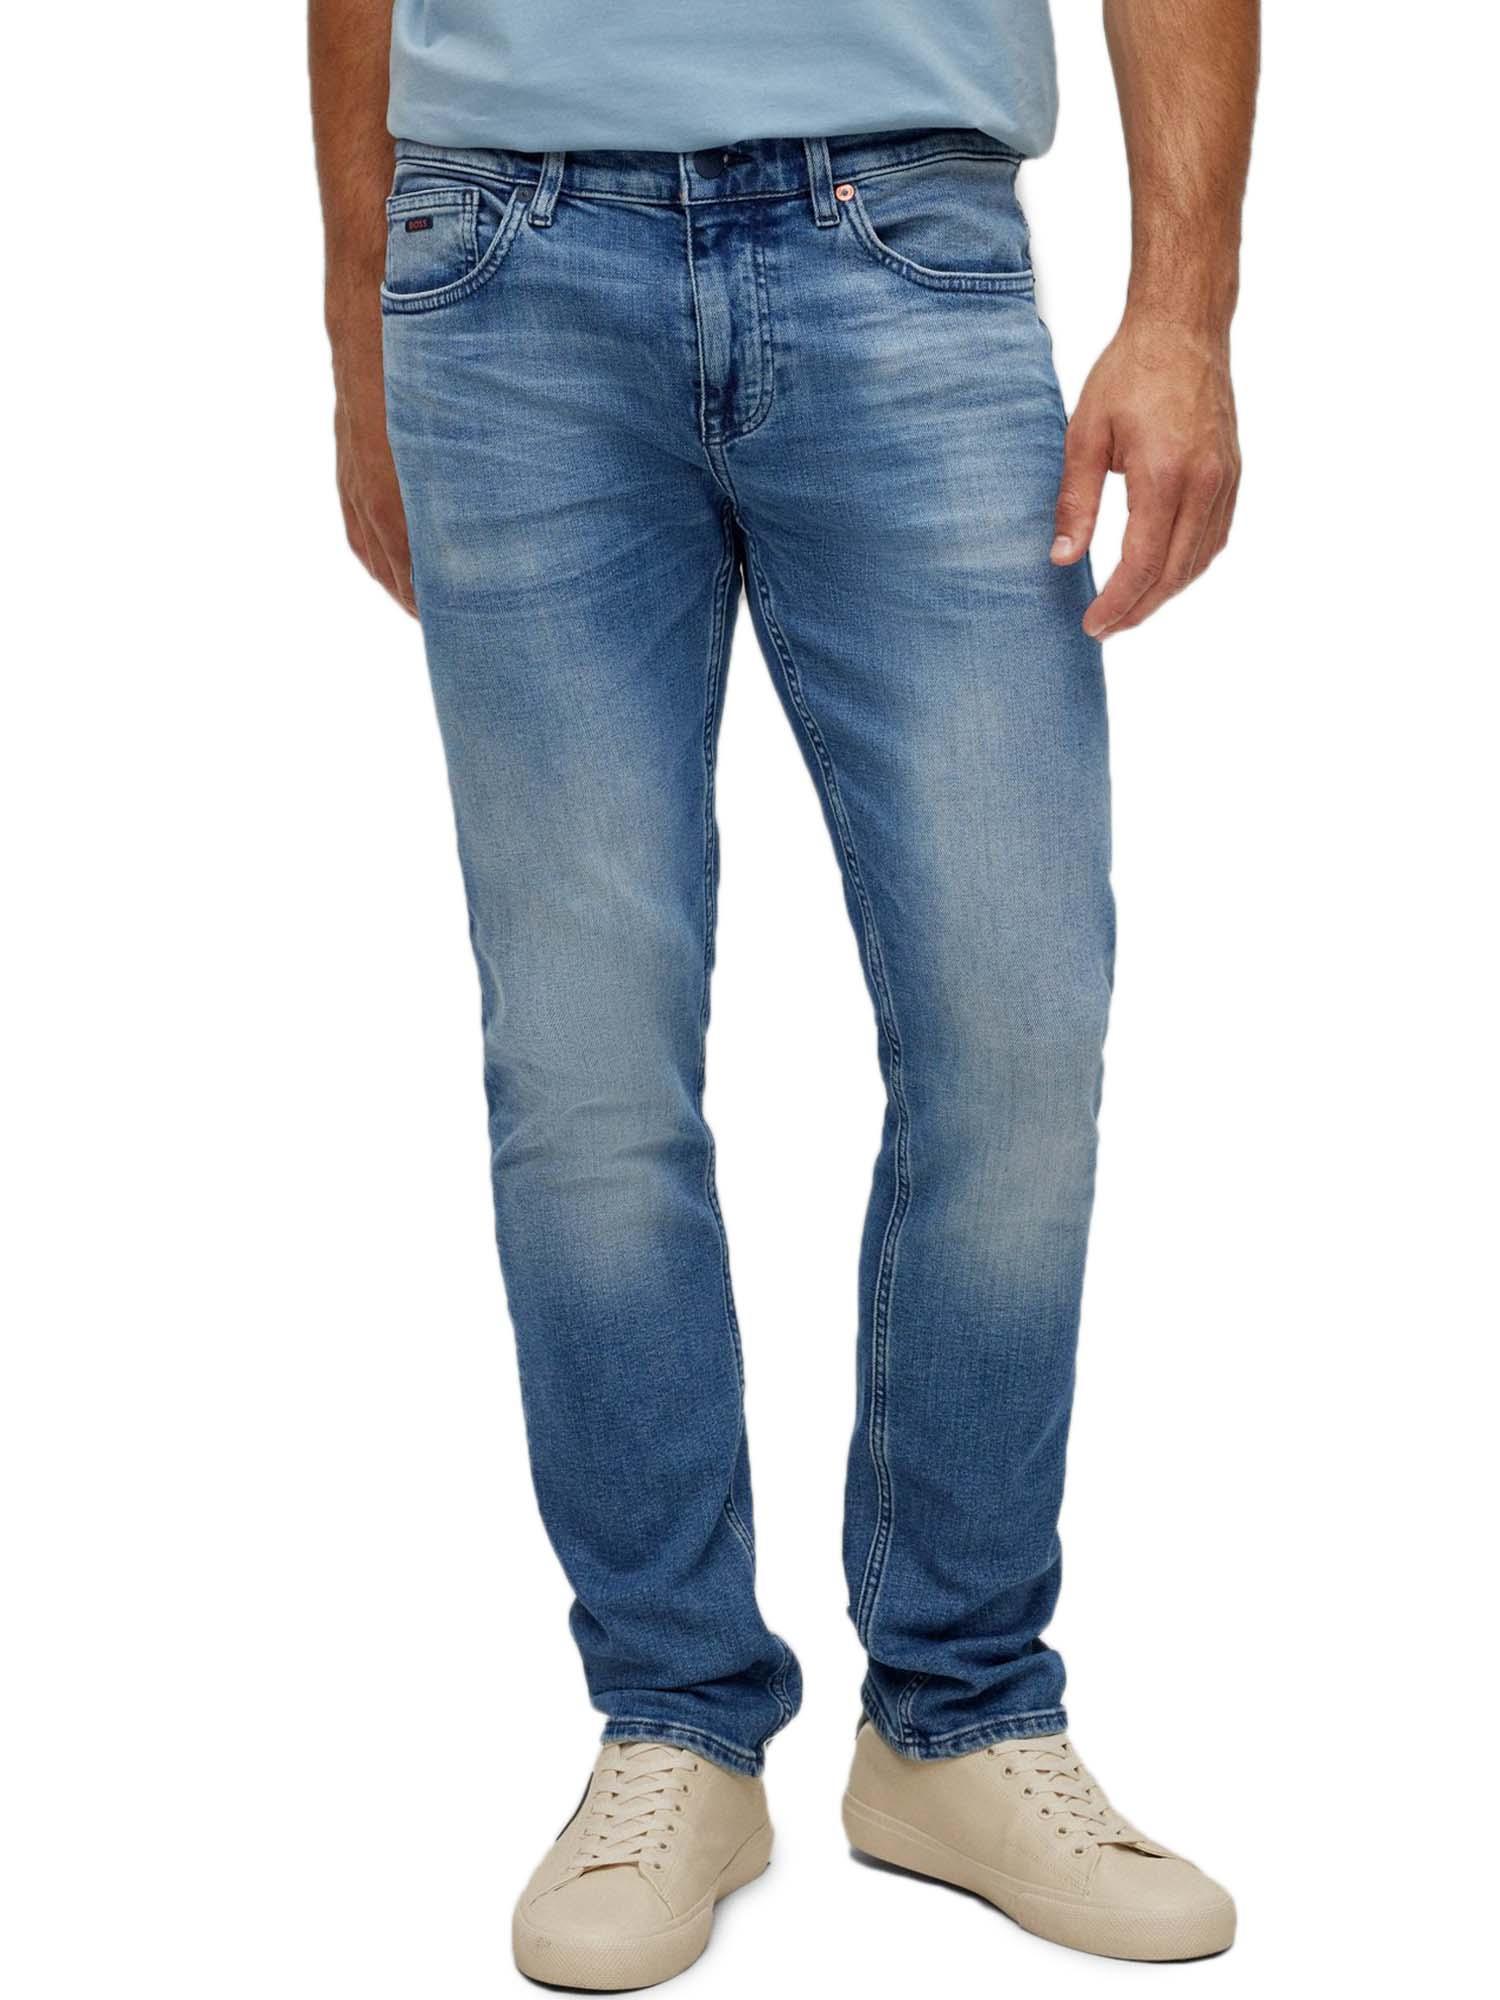 Delaware slim fit jeans - medium blue